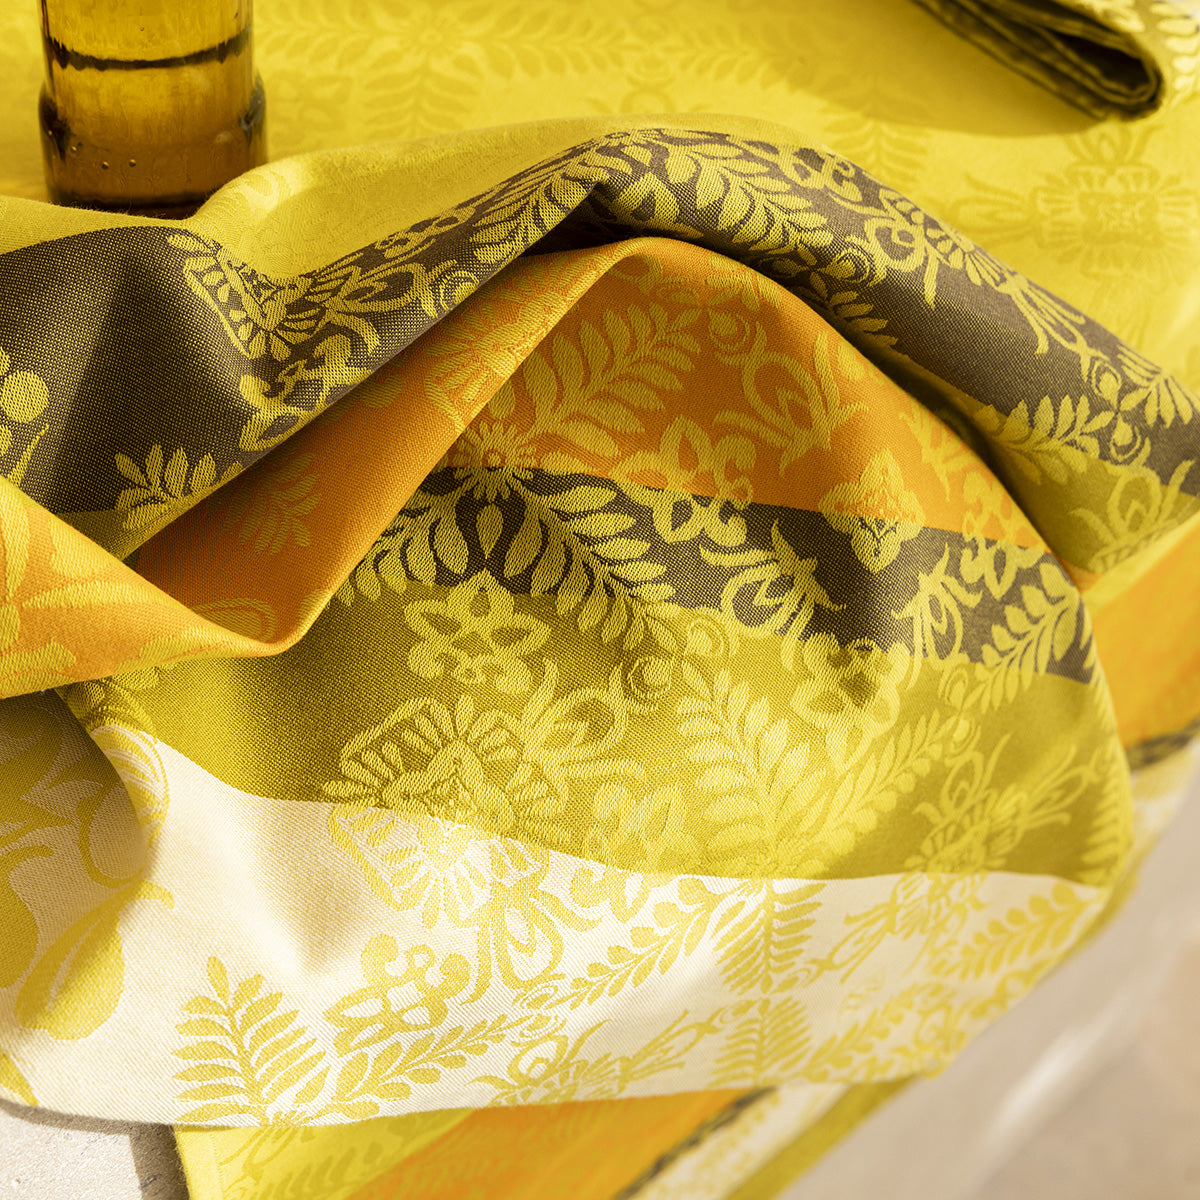 NEW! Mumbai Safran Yellow Tablecloth COATED